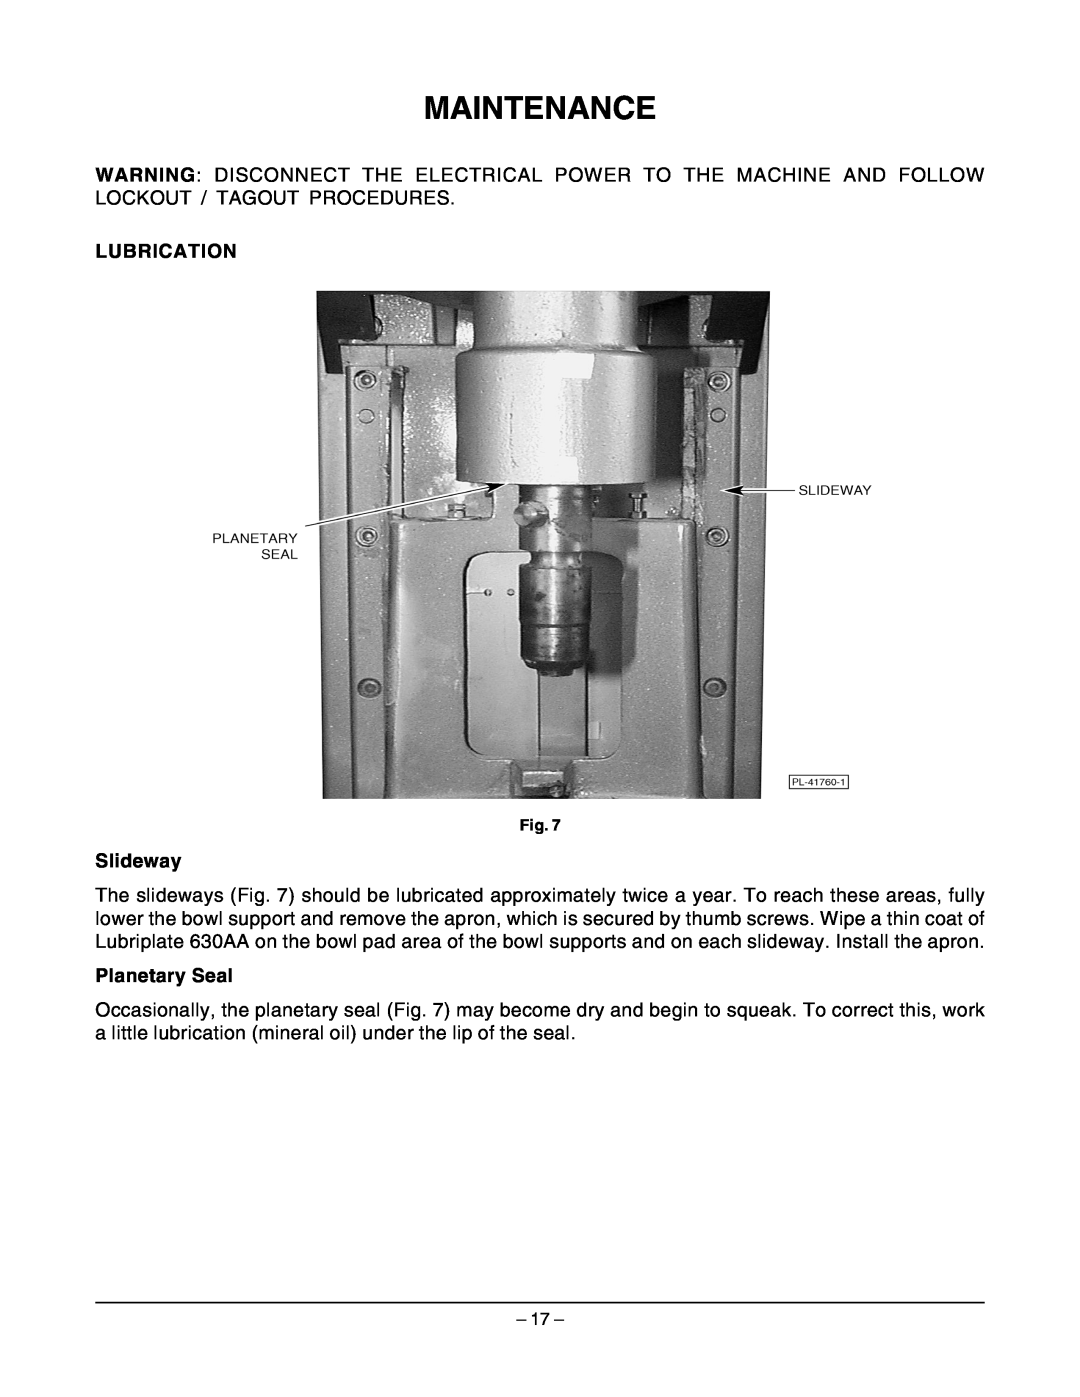 Hobart HL661 instruction manual Maintenance, Lubrication, Slideway, Planetary Seal 